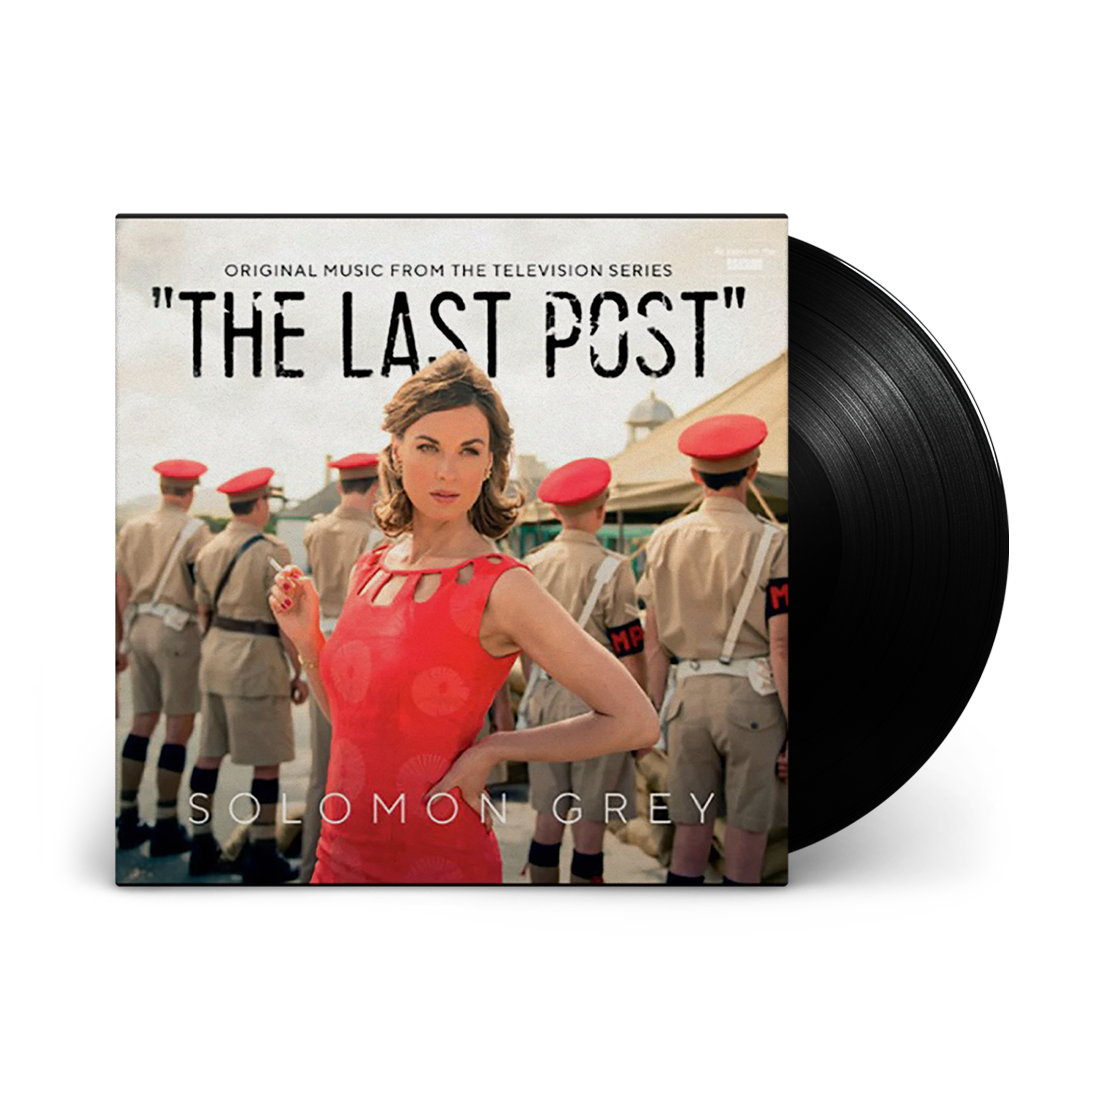 Solomon Grey - The Last Post Signed Vinyl LP